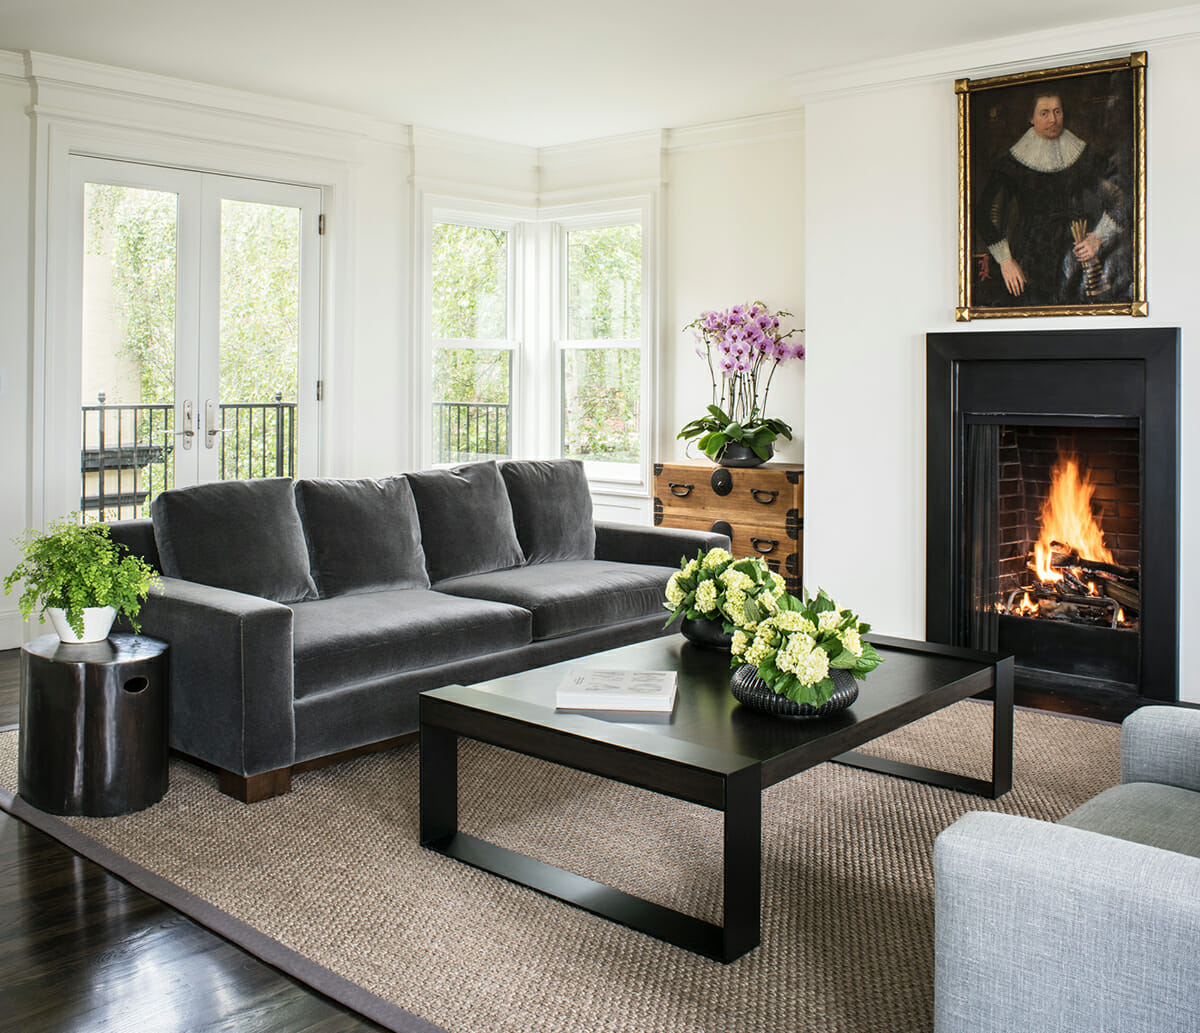 Living Room Interior Design_Plants